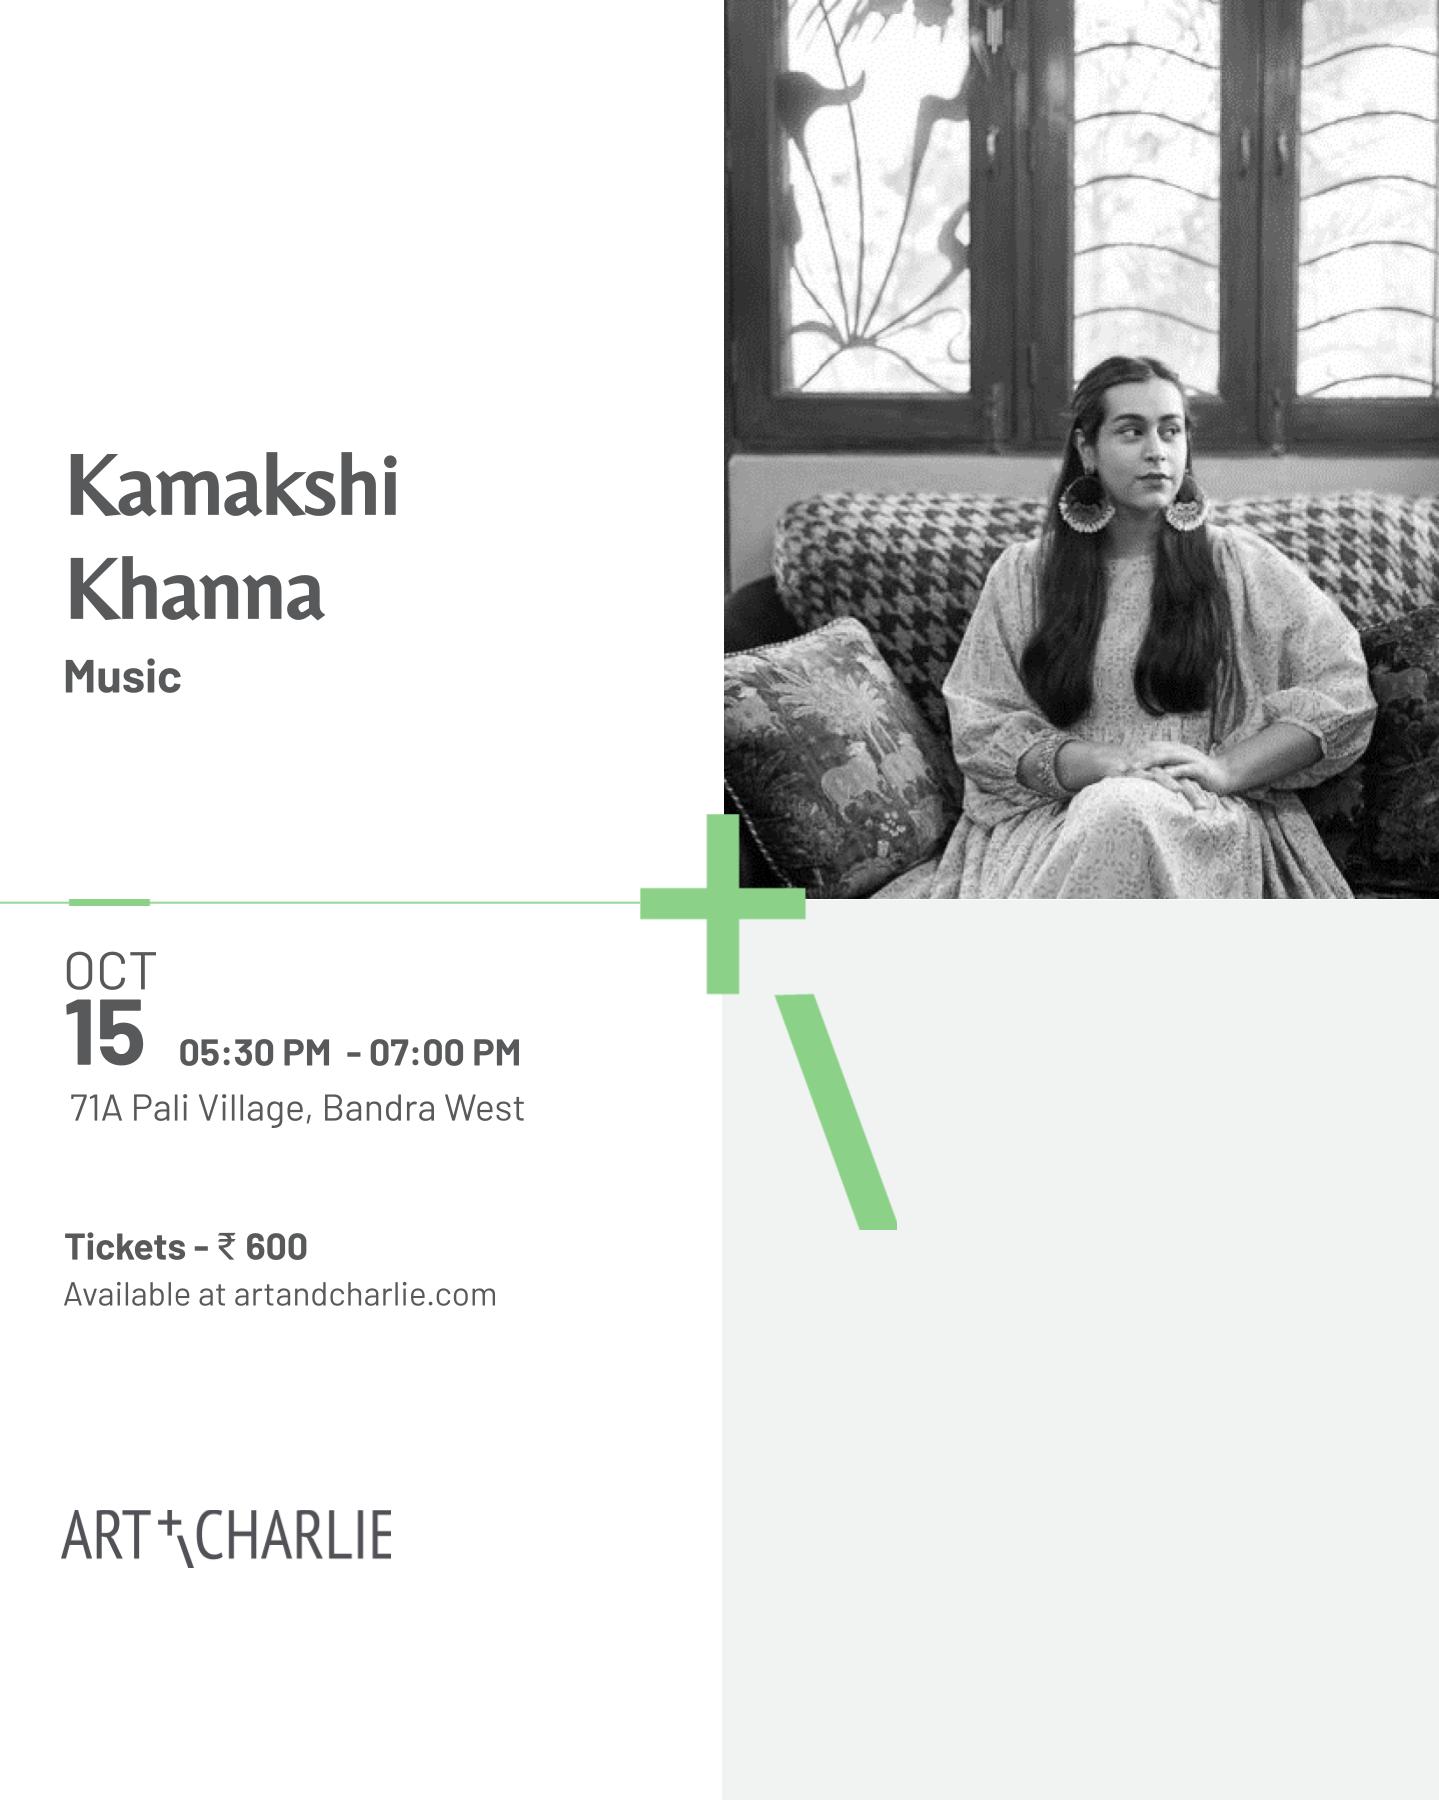 Ticket - Kamakshi Khanna - Music - Oct 15th - 5:30PM to 7PM